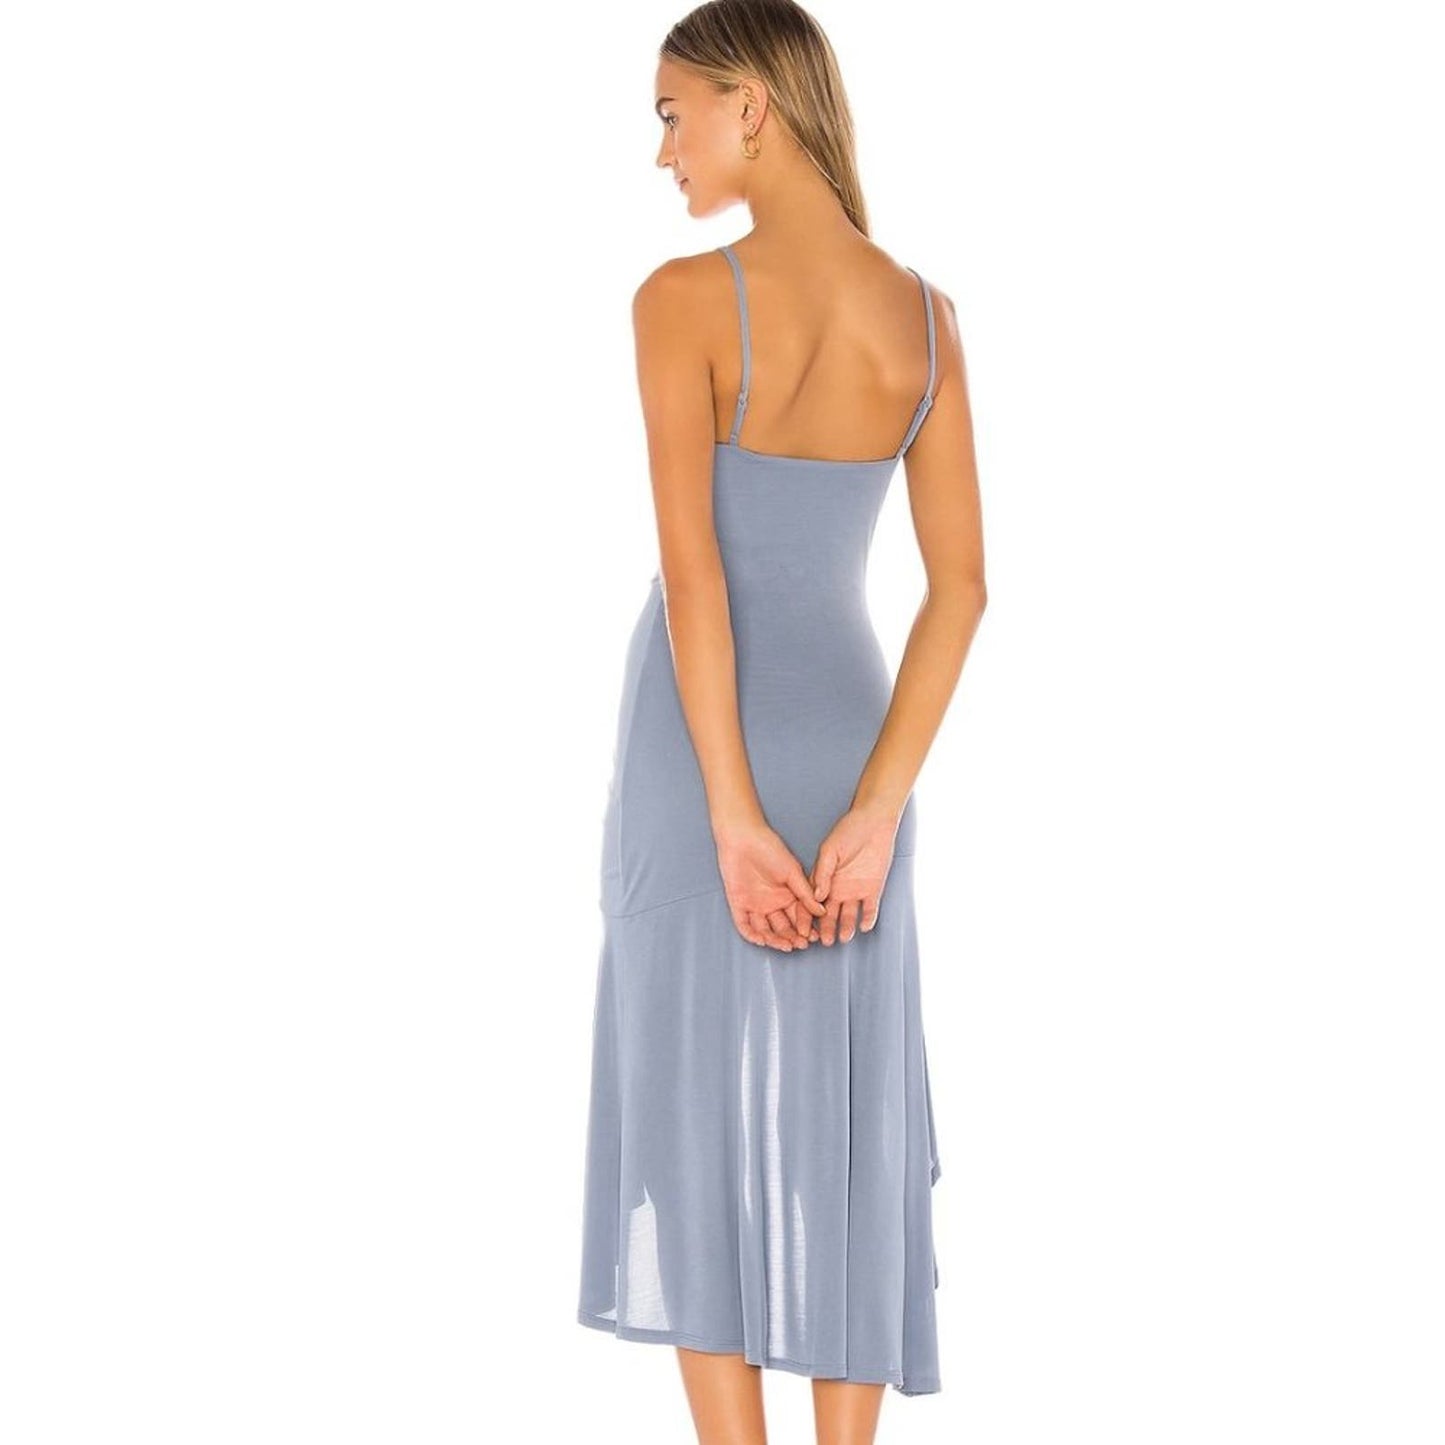 Lovers & Friends Aniyah Midi Dress in Hydrangea Blue NWOT Size Small